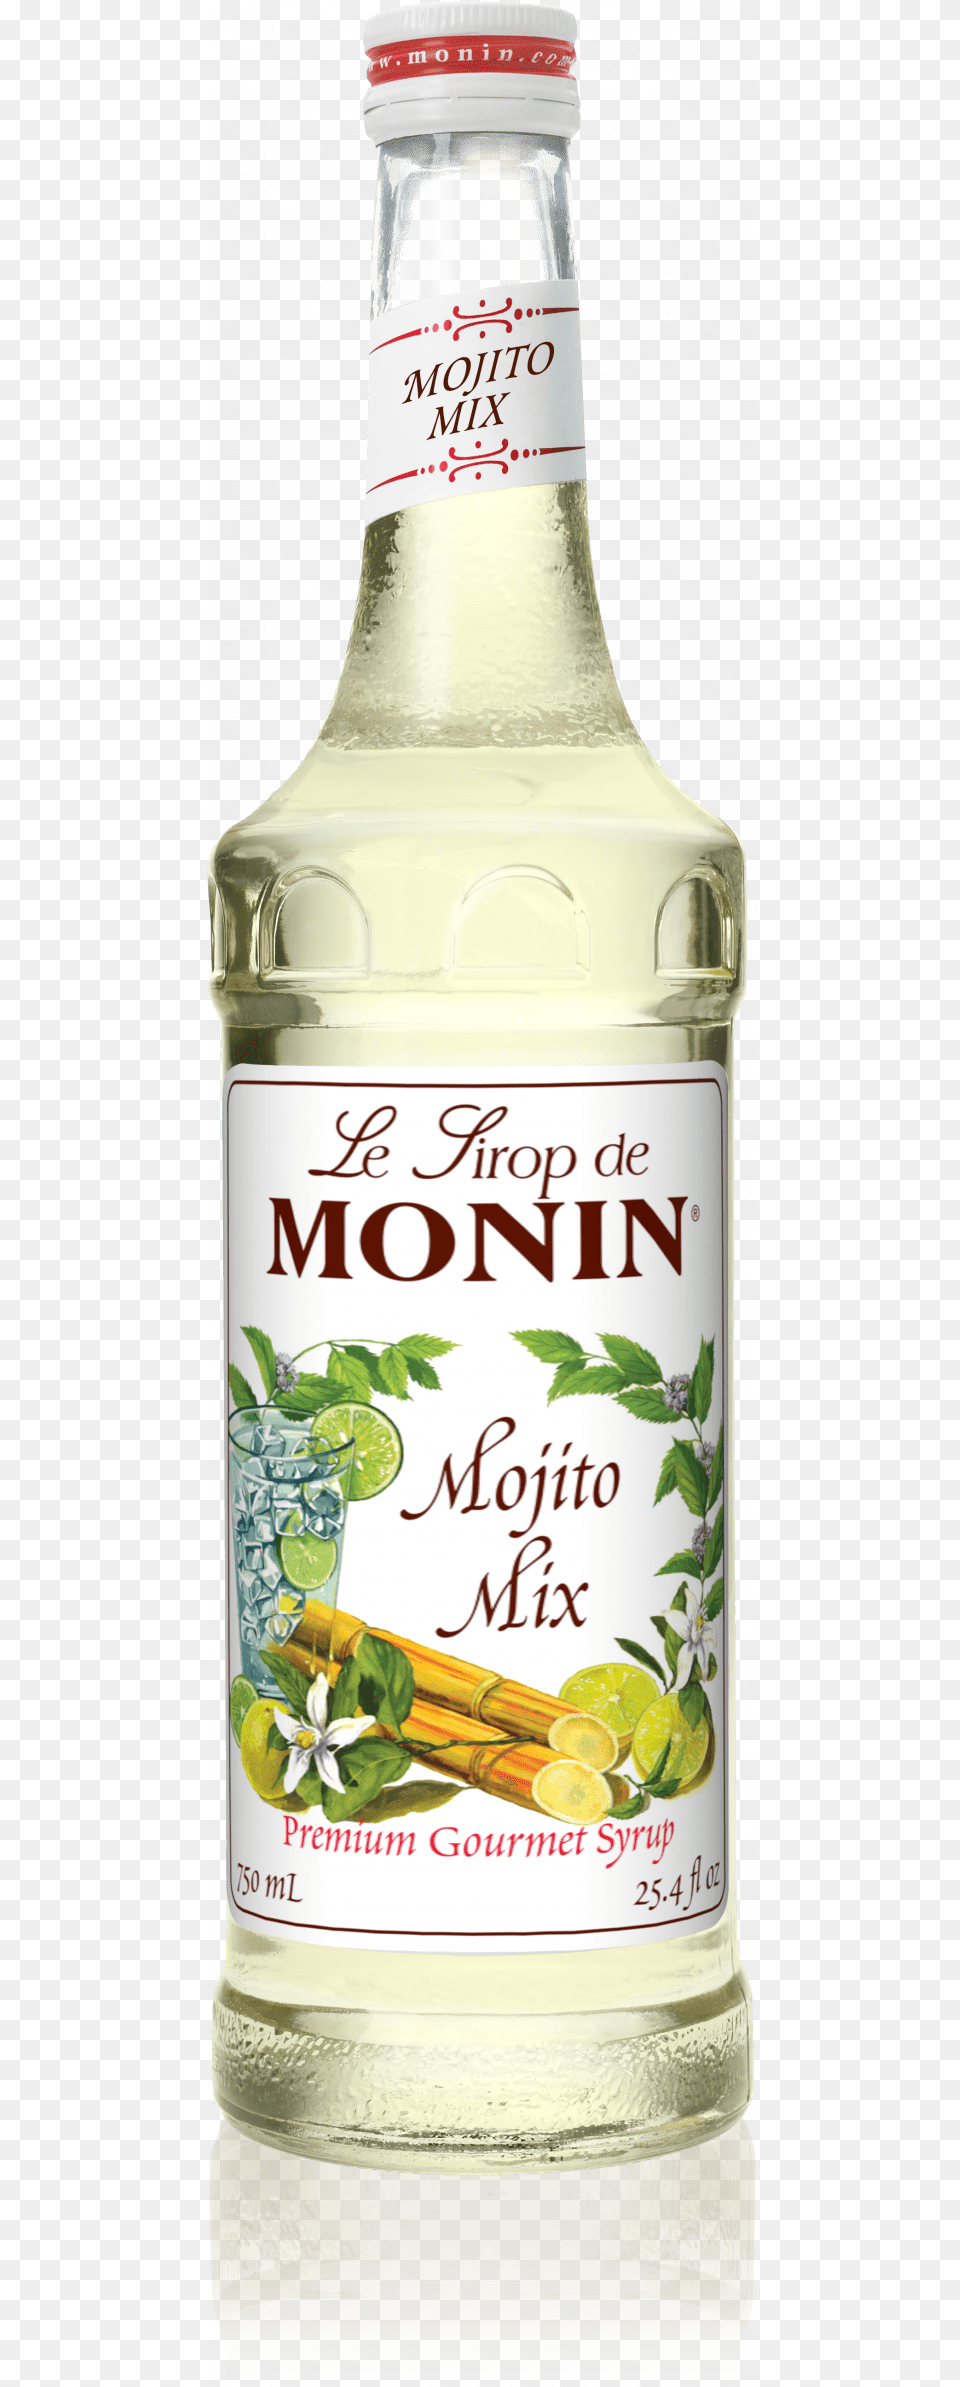 Etiqueta Atrs Mojito Mix 750ml Monin Mojito Syrup 750 Ml, Beverage, Alcohol Png Image